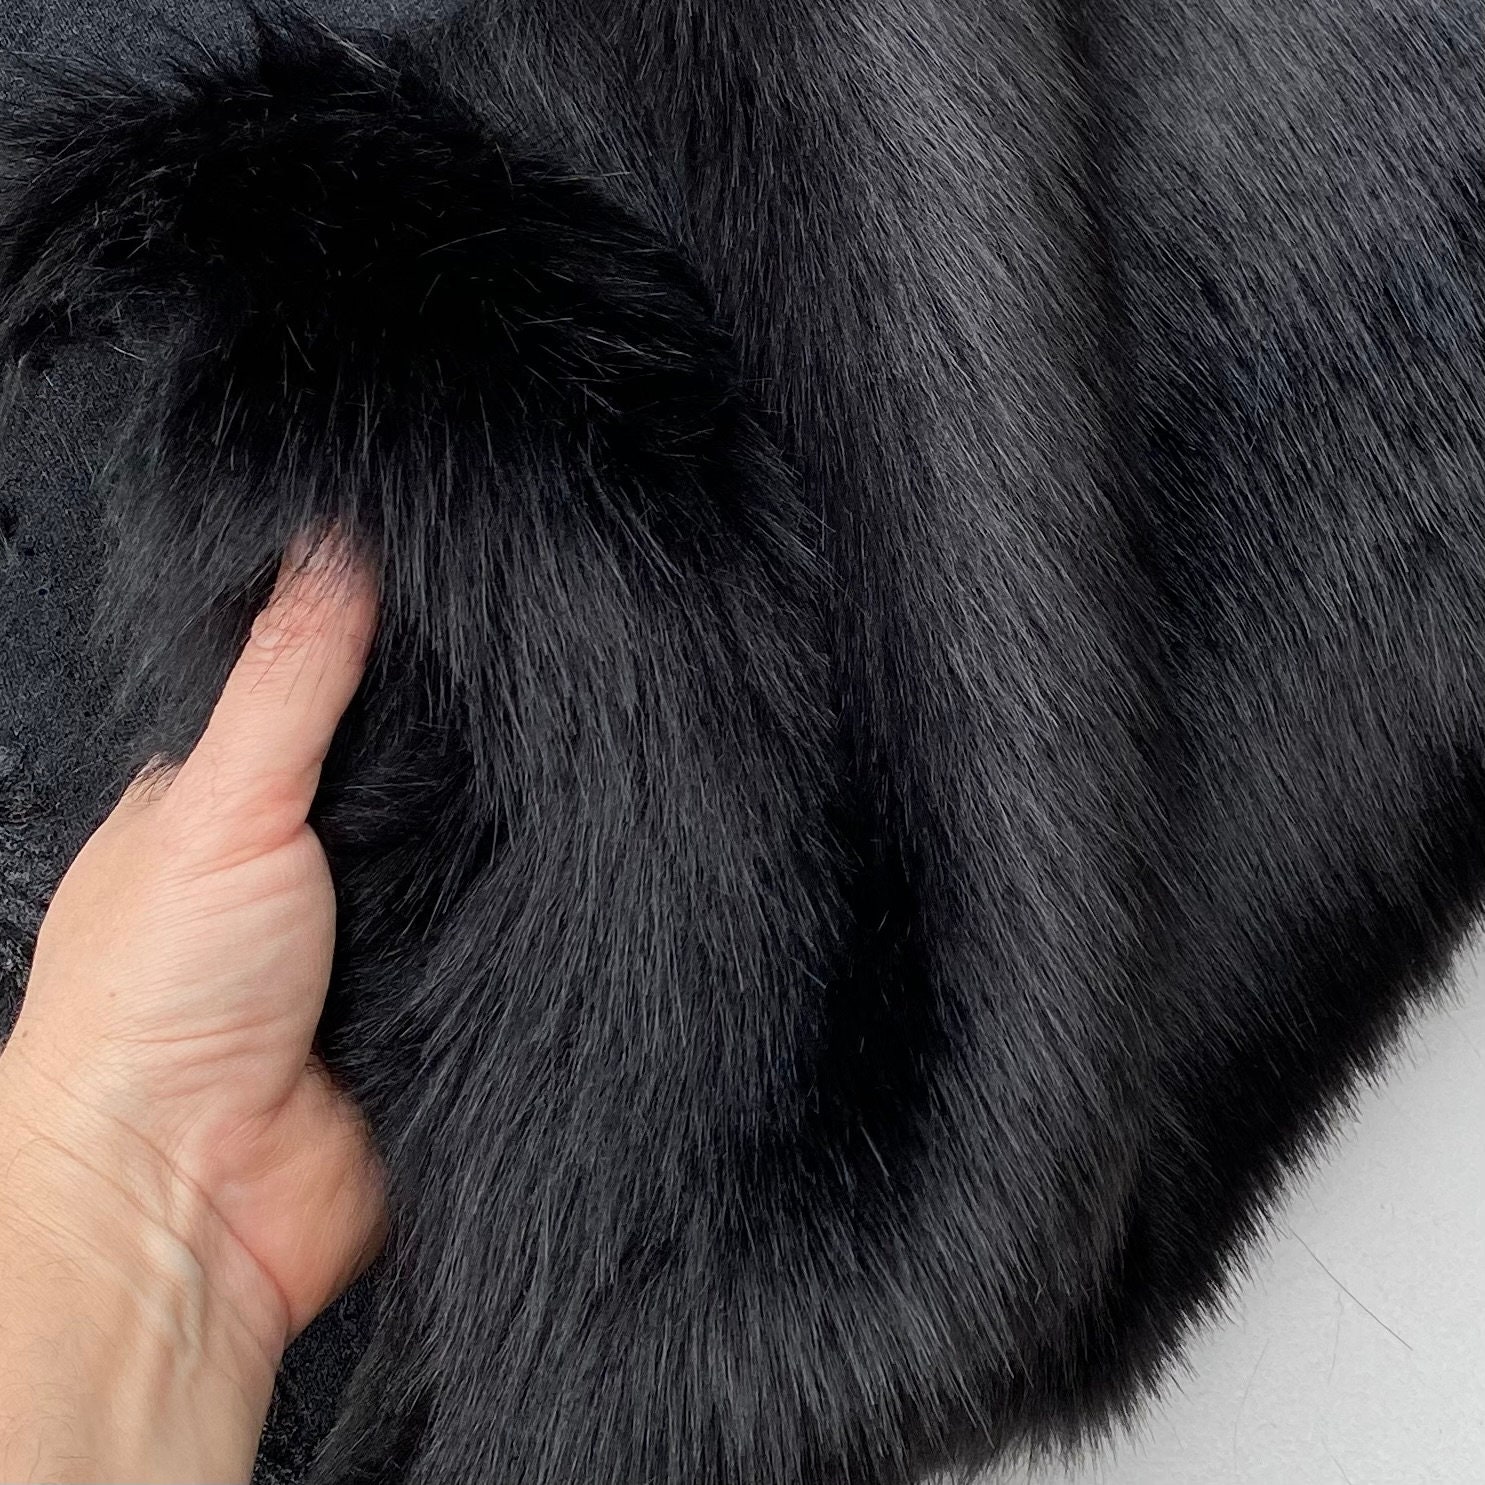 Eden BLACK Shaggy Long Pile Soft Faux Fur Fabric for Fursuit, Cosplay  Costume, Photo Prop, Trim, Throw Pillow, Crafts 